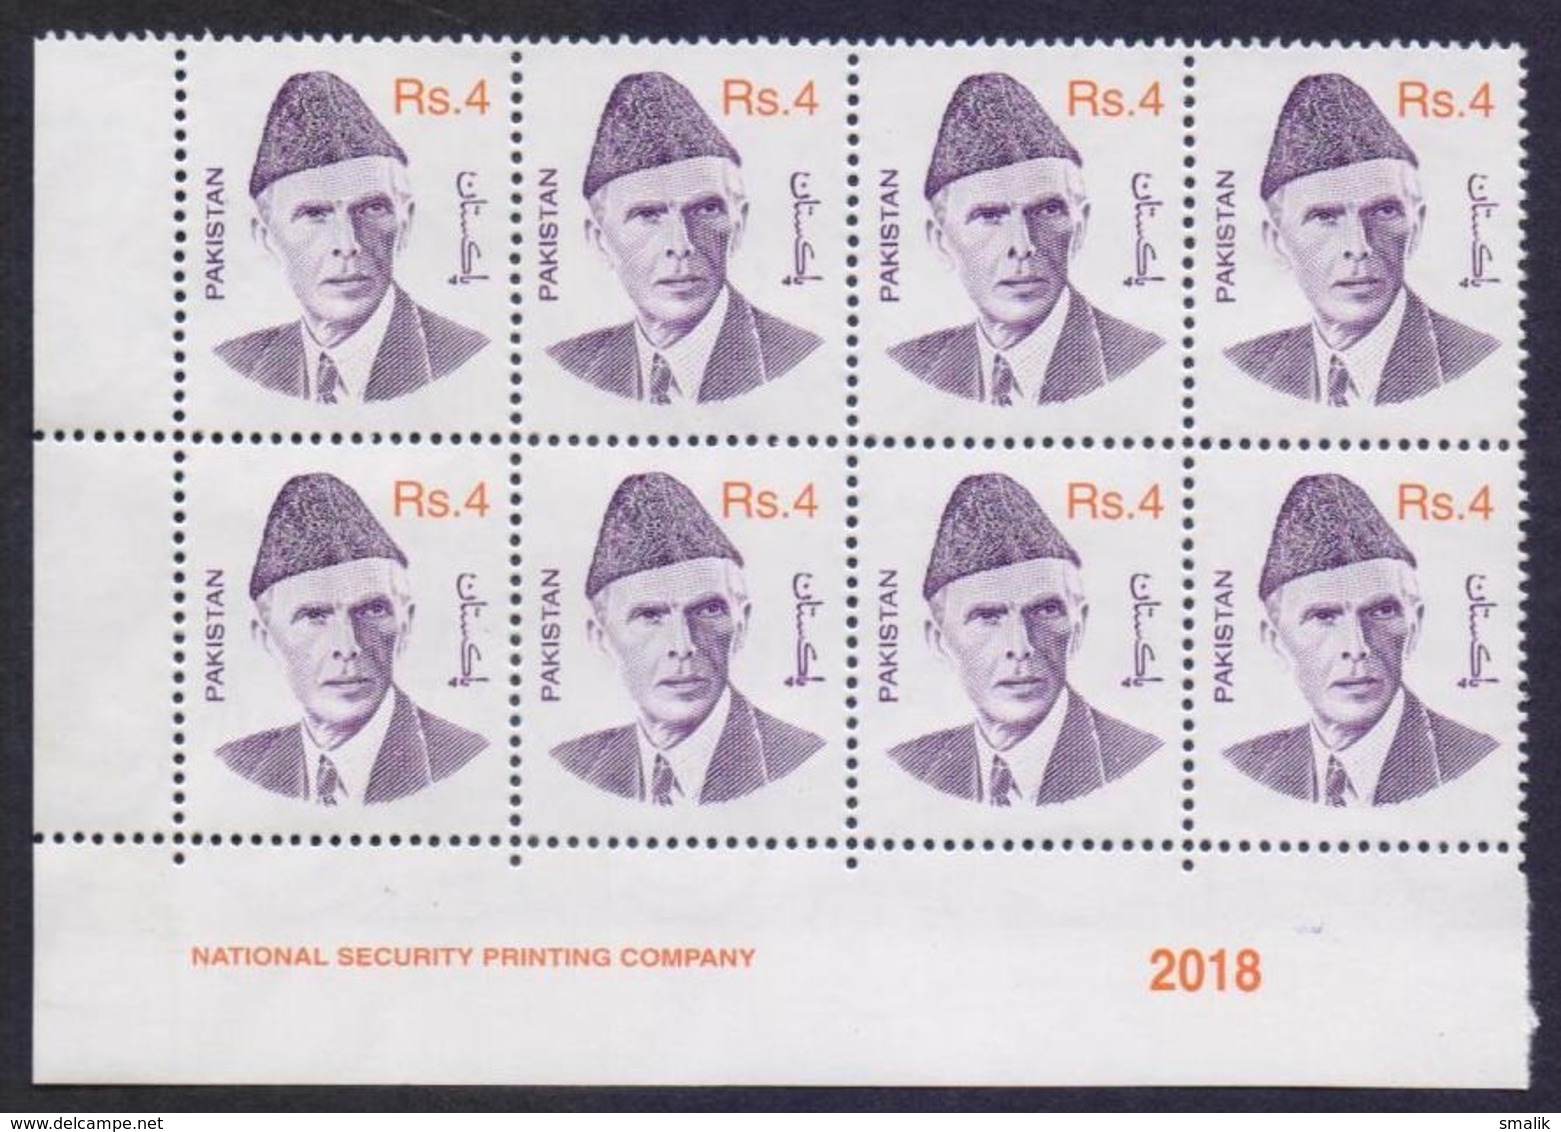 PAKISTAN - Quaid-e-Azam Jinnah Rs.4 Definitive Corner Block Of 8 Stamps With Year Imprint "2018" MNH - Pakistan